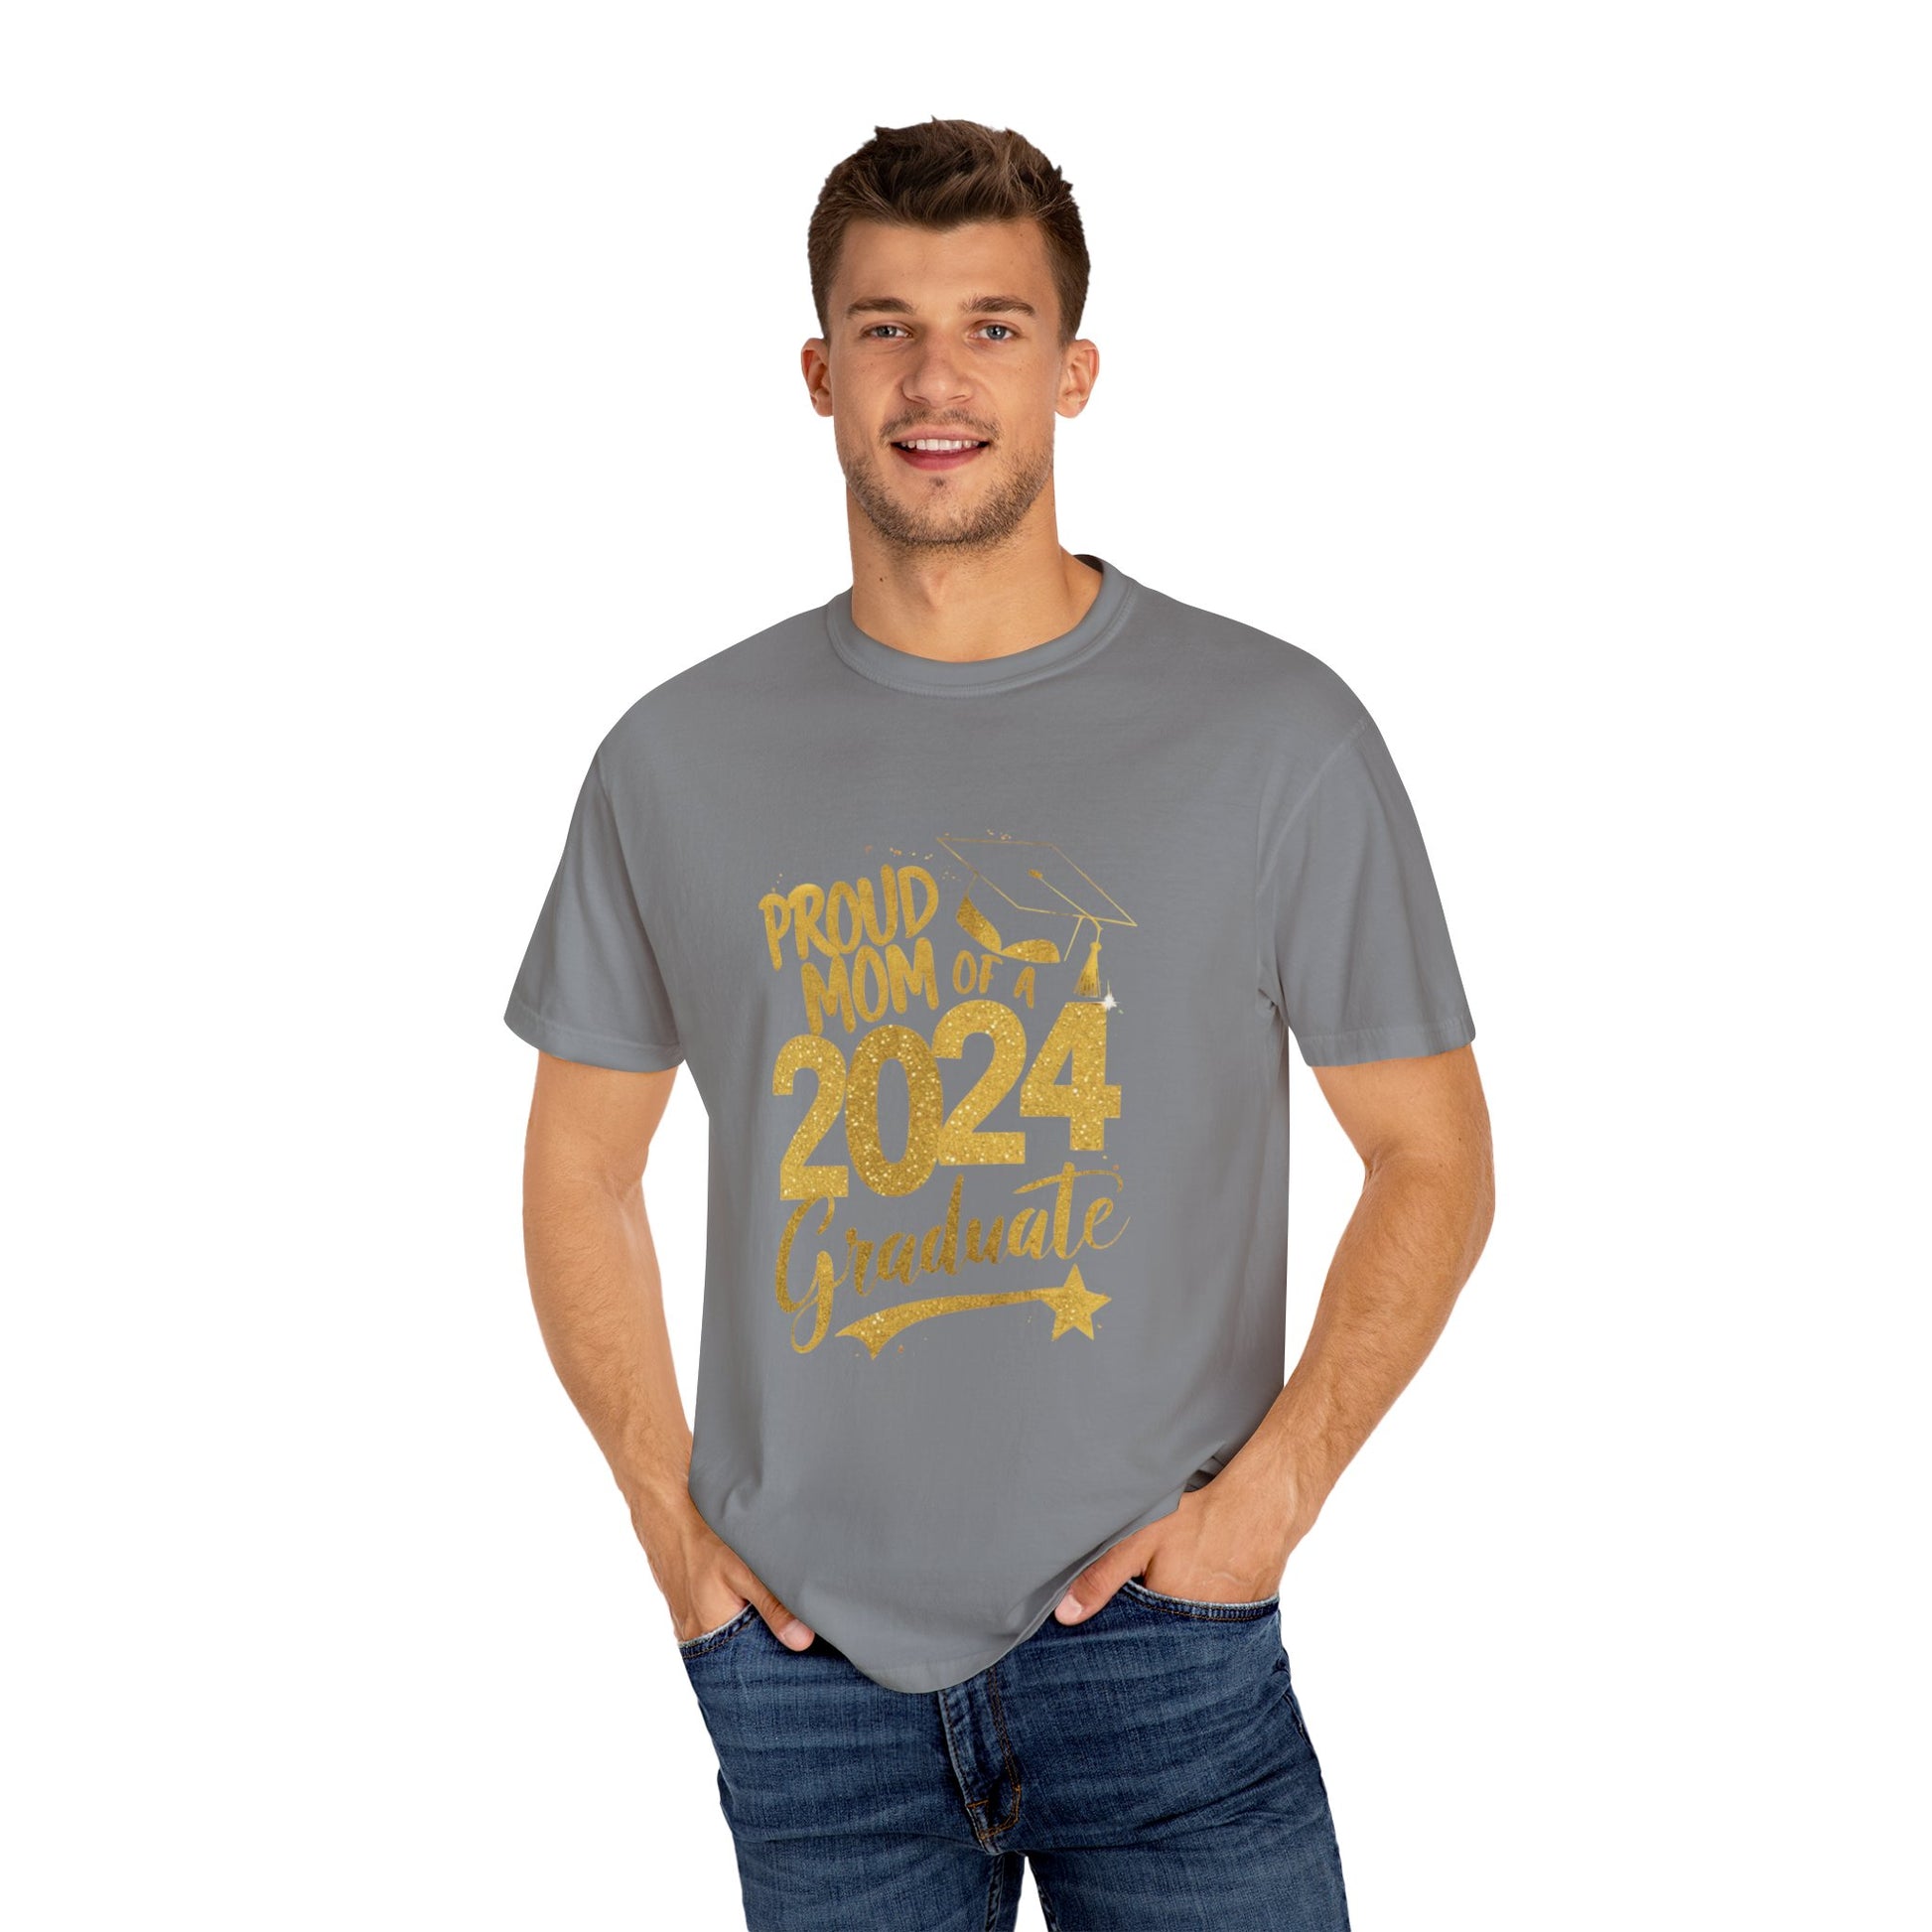 Proud of Mom 2024 Graduate Unisex Garment-dyed T-shirt Cotton Funny Humorous Graphic Soft Premium Unisex Men Women Grey T-shirt Birthday Gift-42